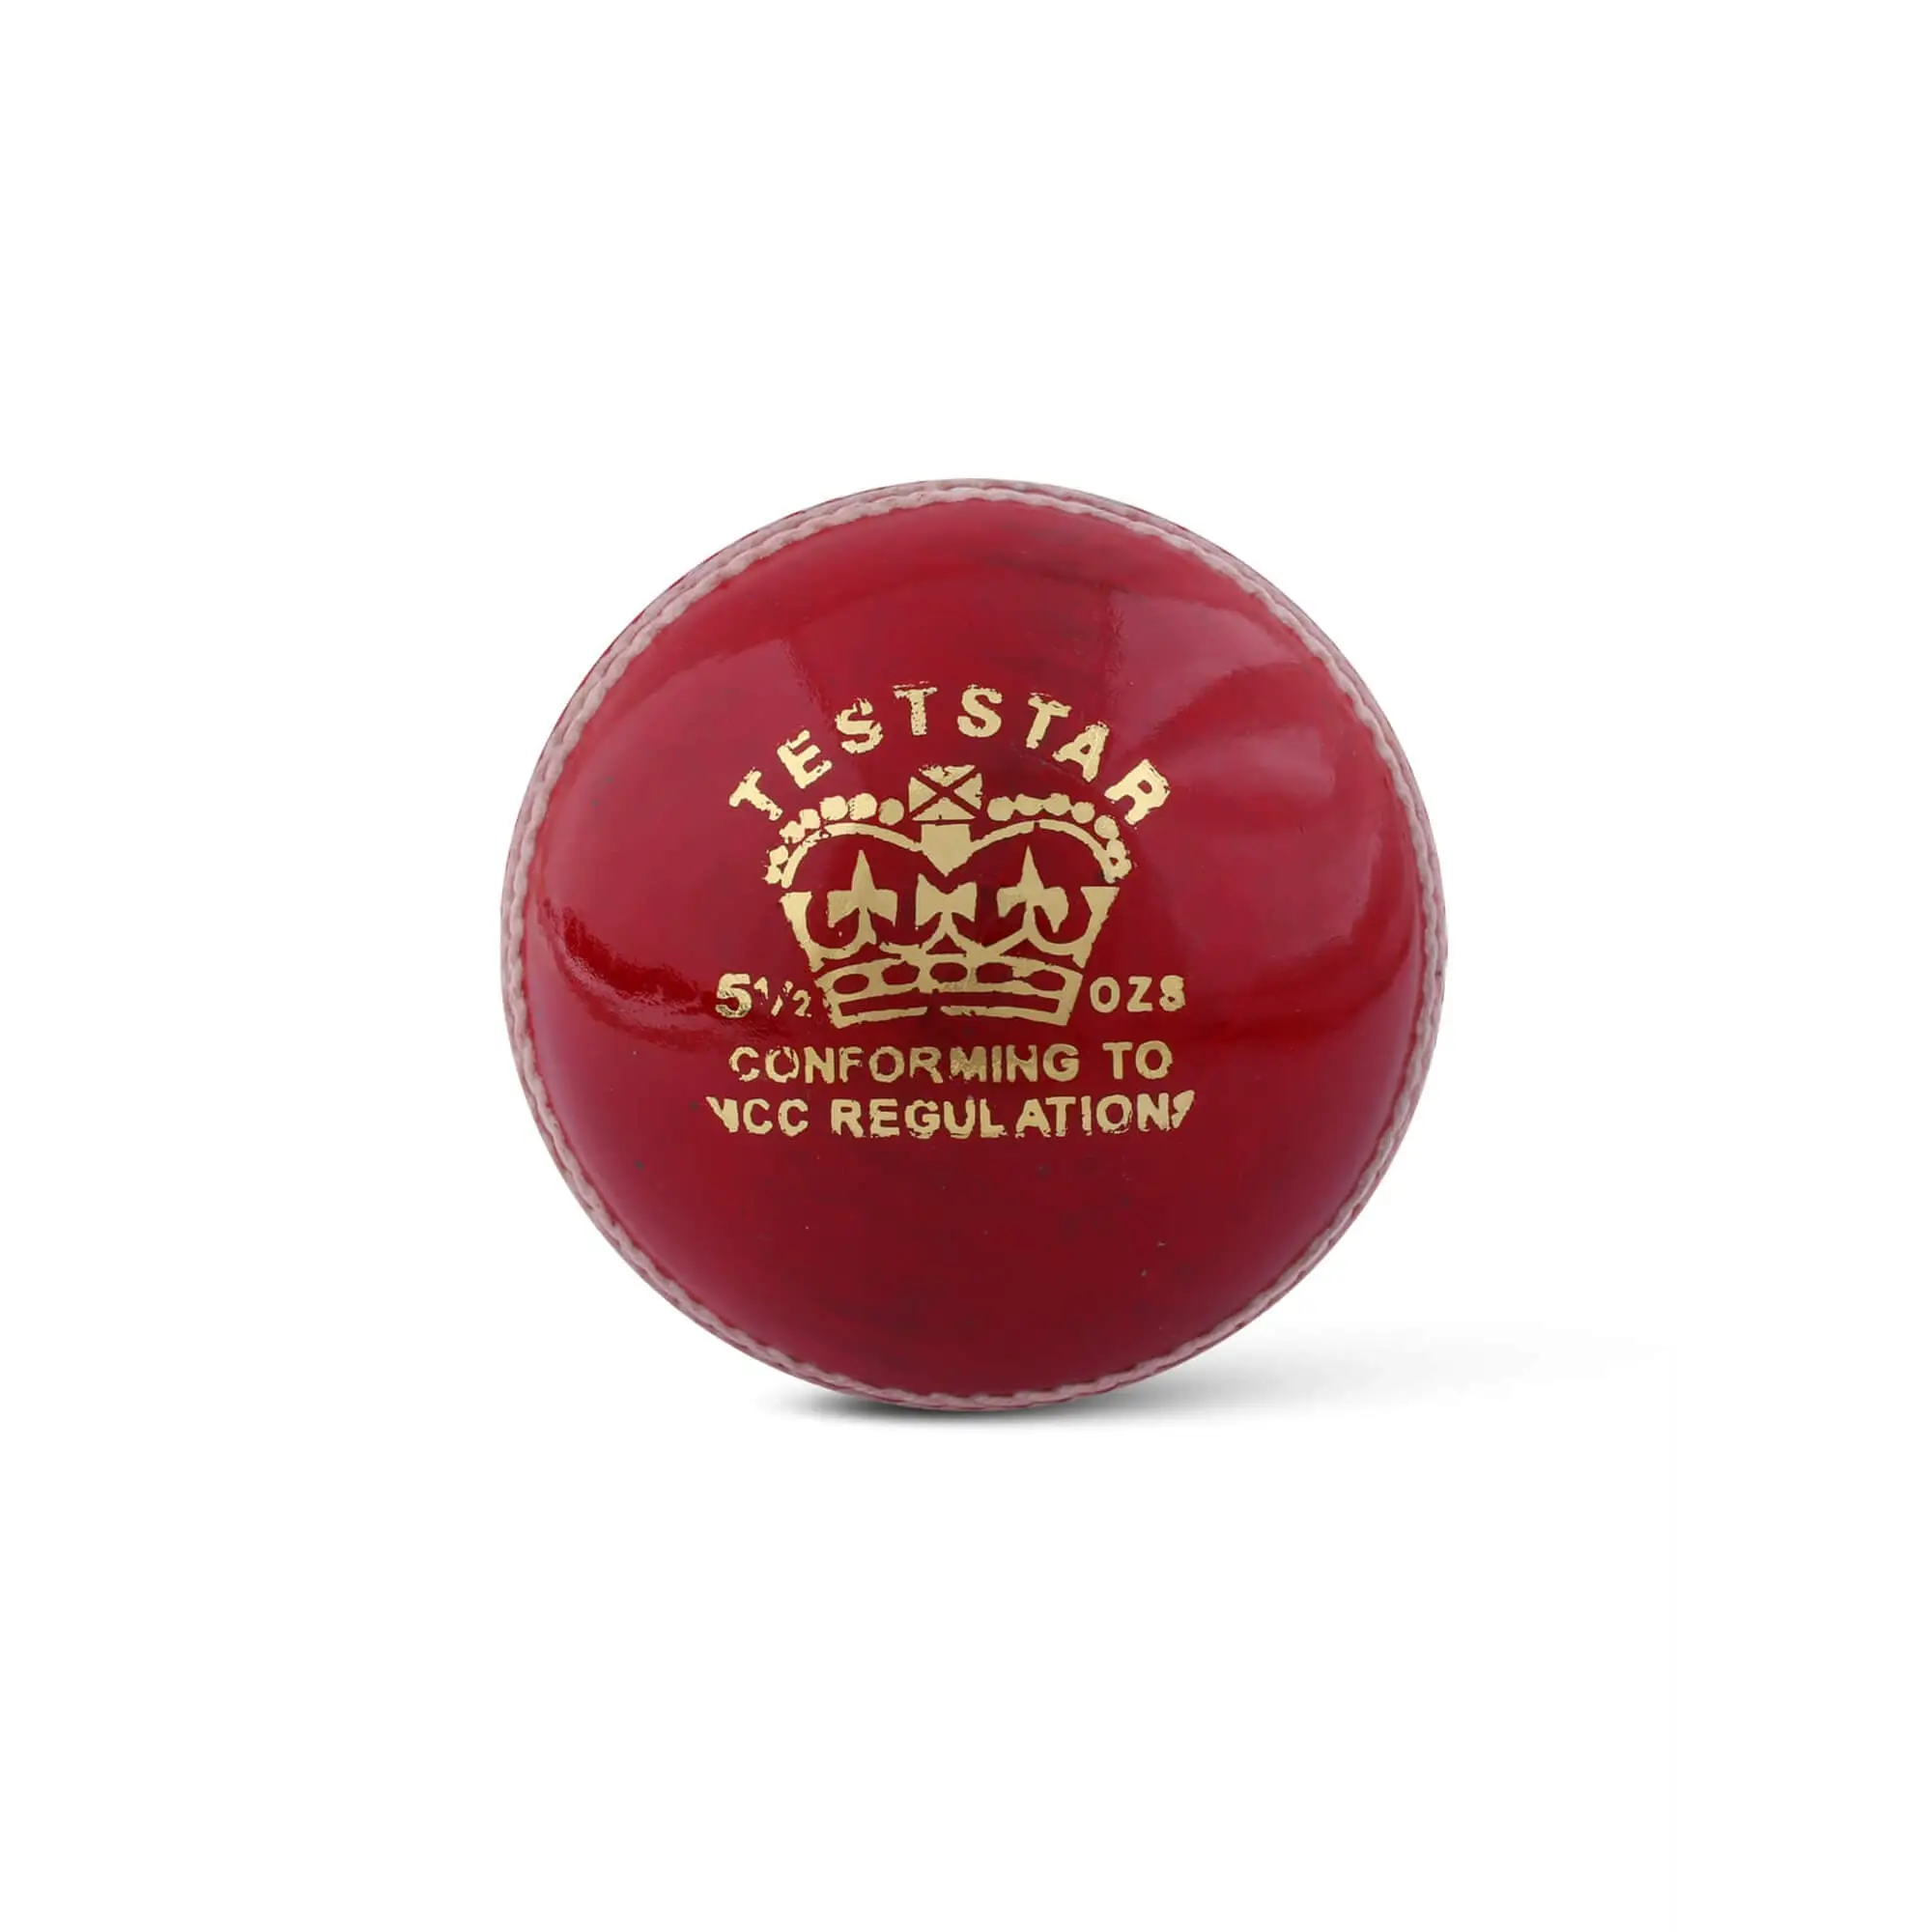 CA Test Star Cricket Hard Ball Chrome Leather Premium Quality - Senior / Red - BALL - 4 PCS LEATHER